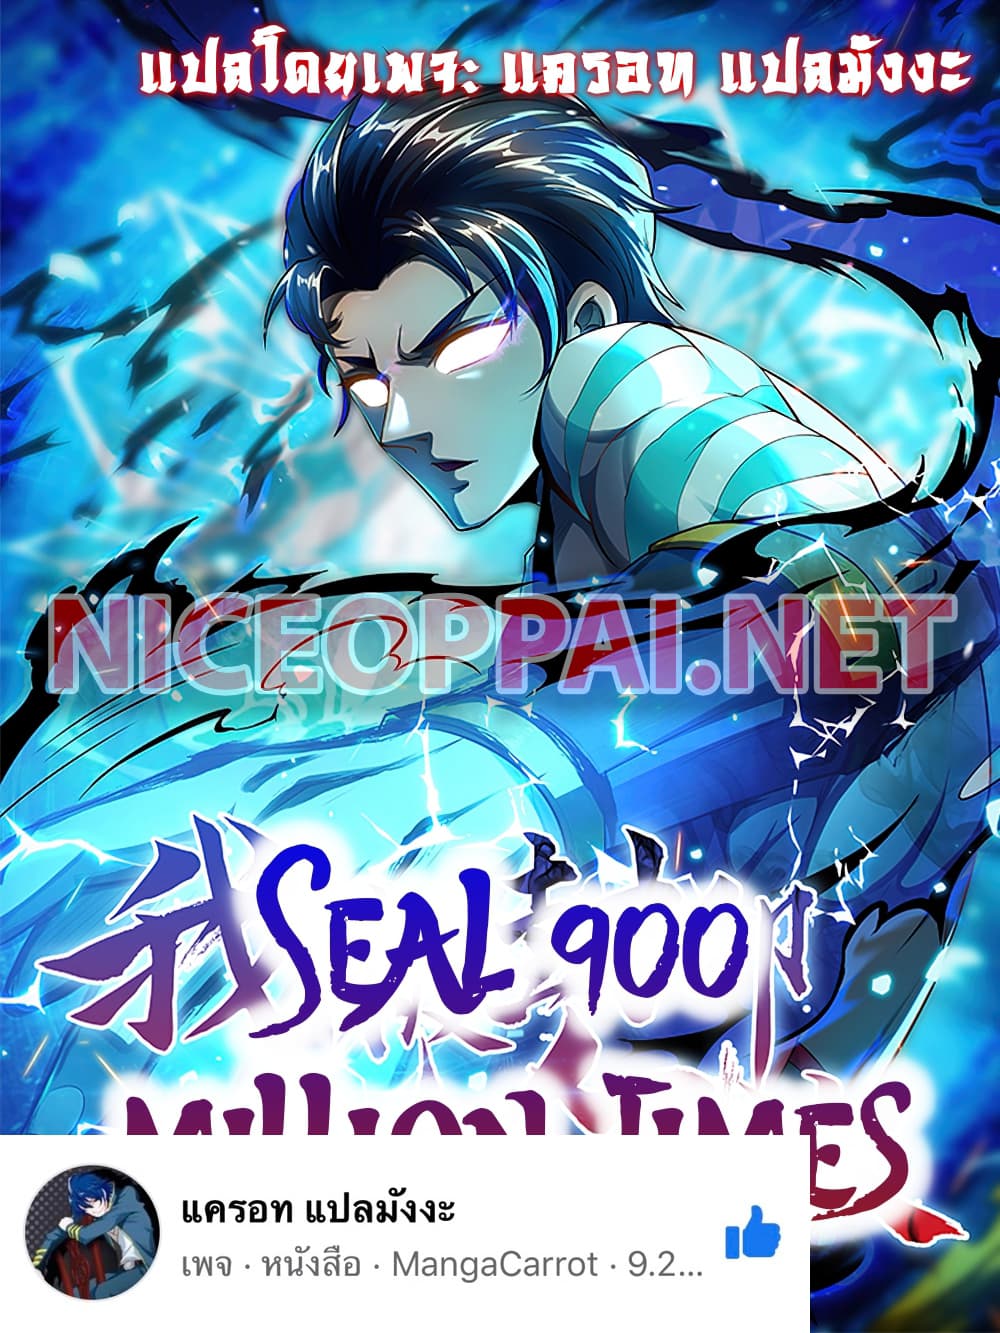 Seal 900 Million Times 15 (1)